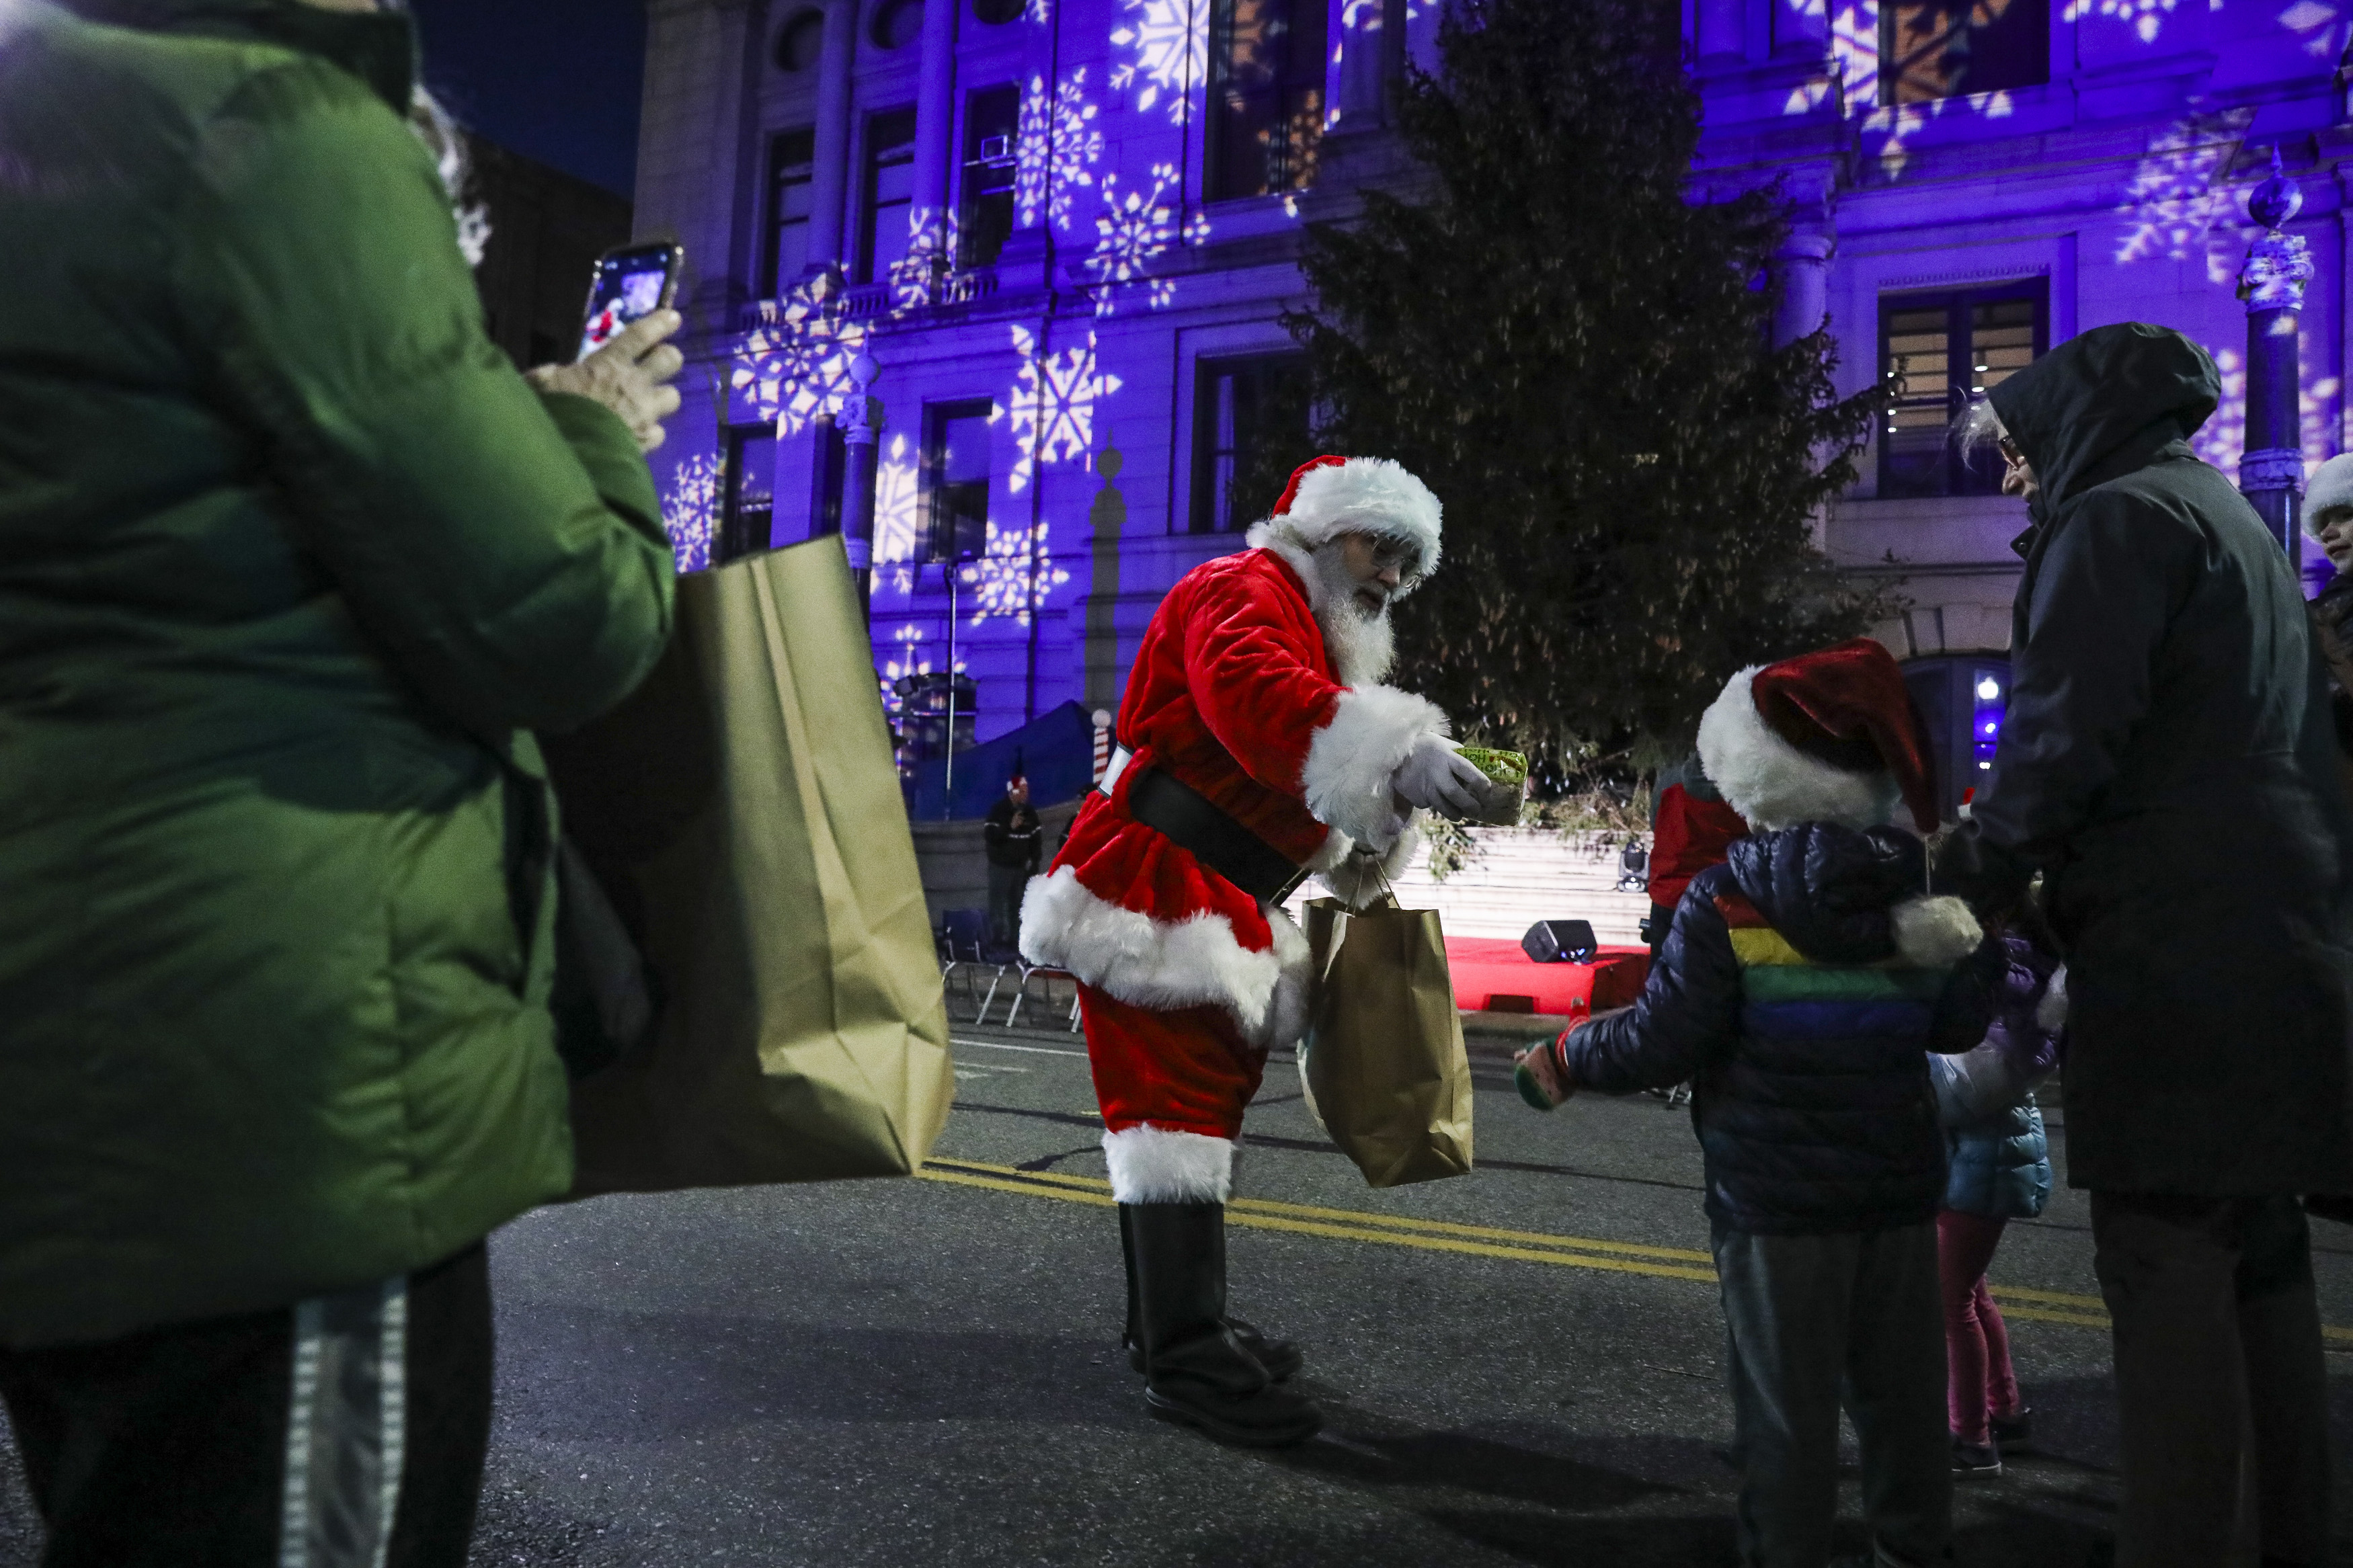 Santa Claus distributes gifts to children.